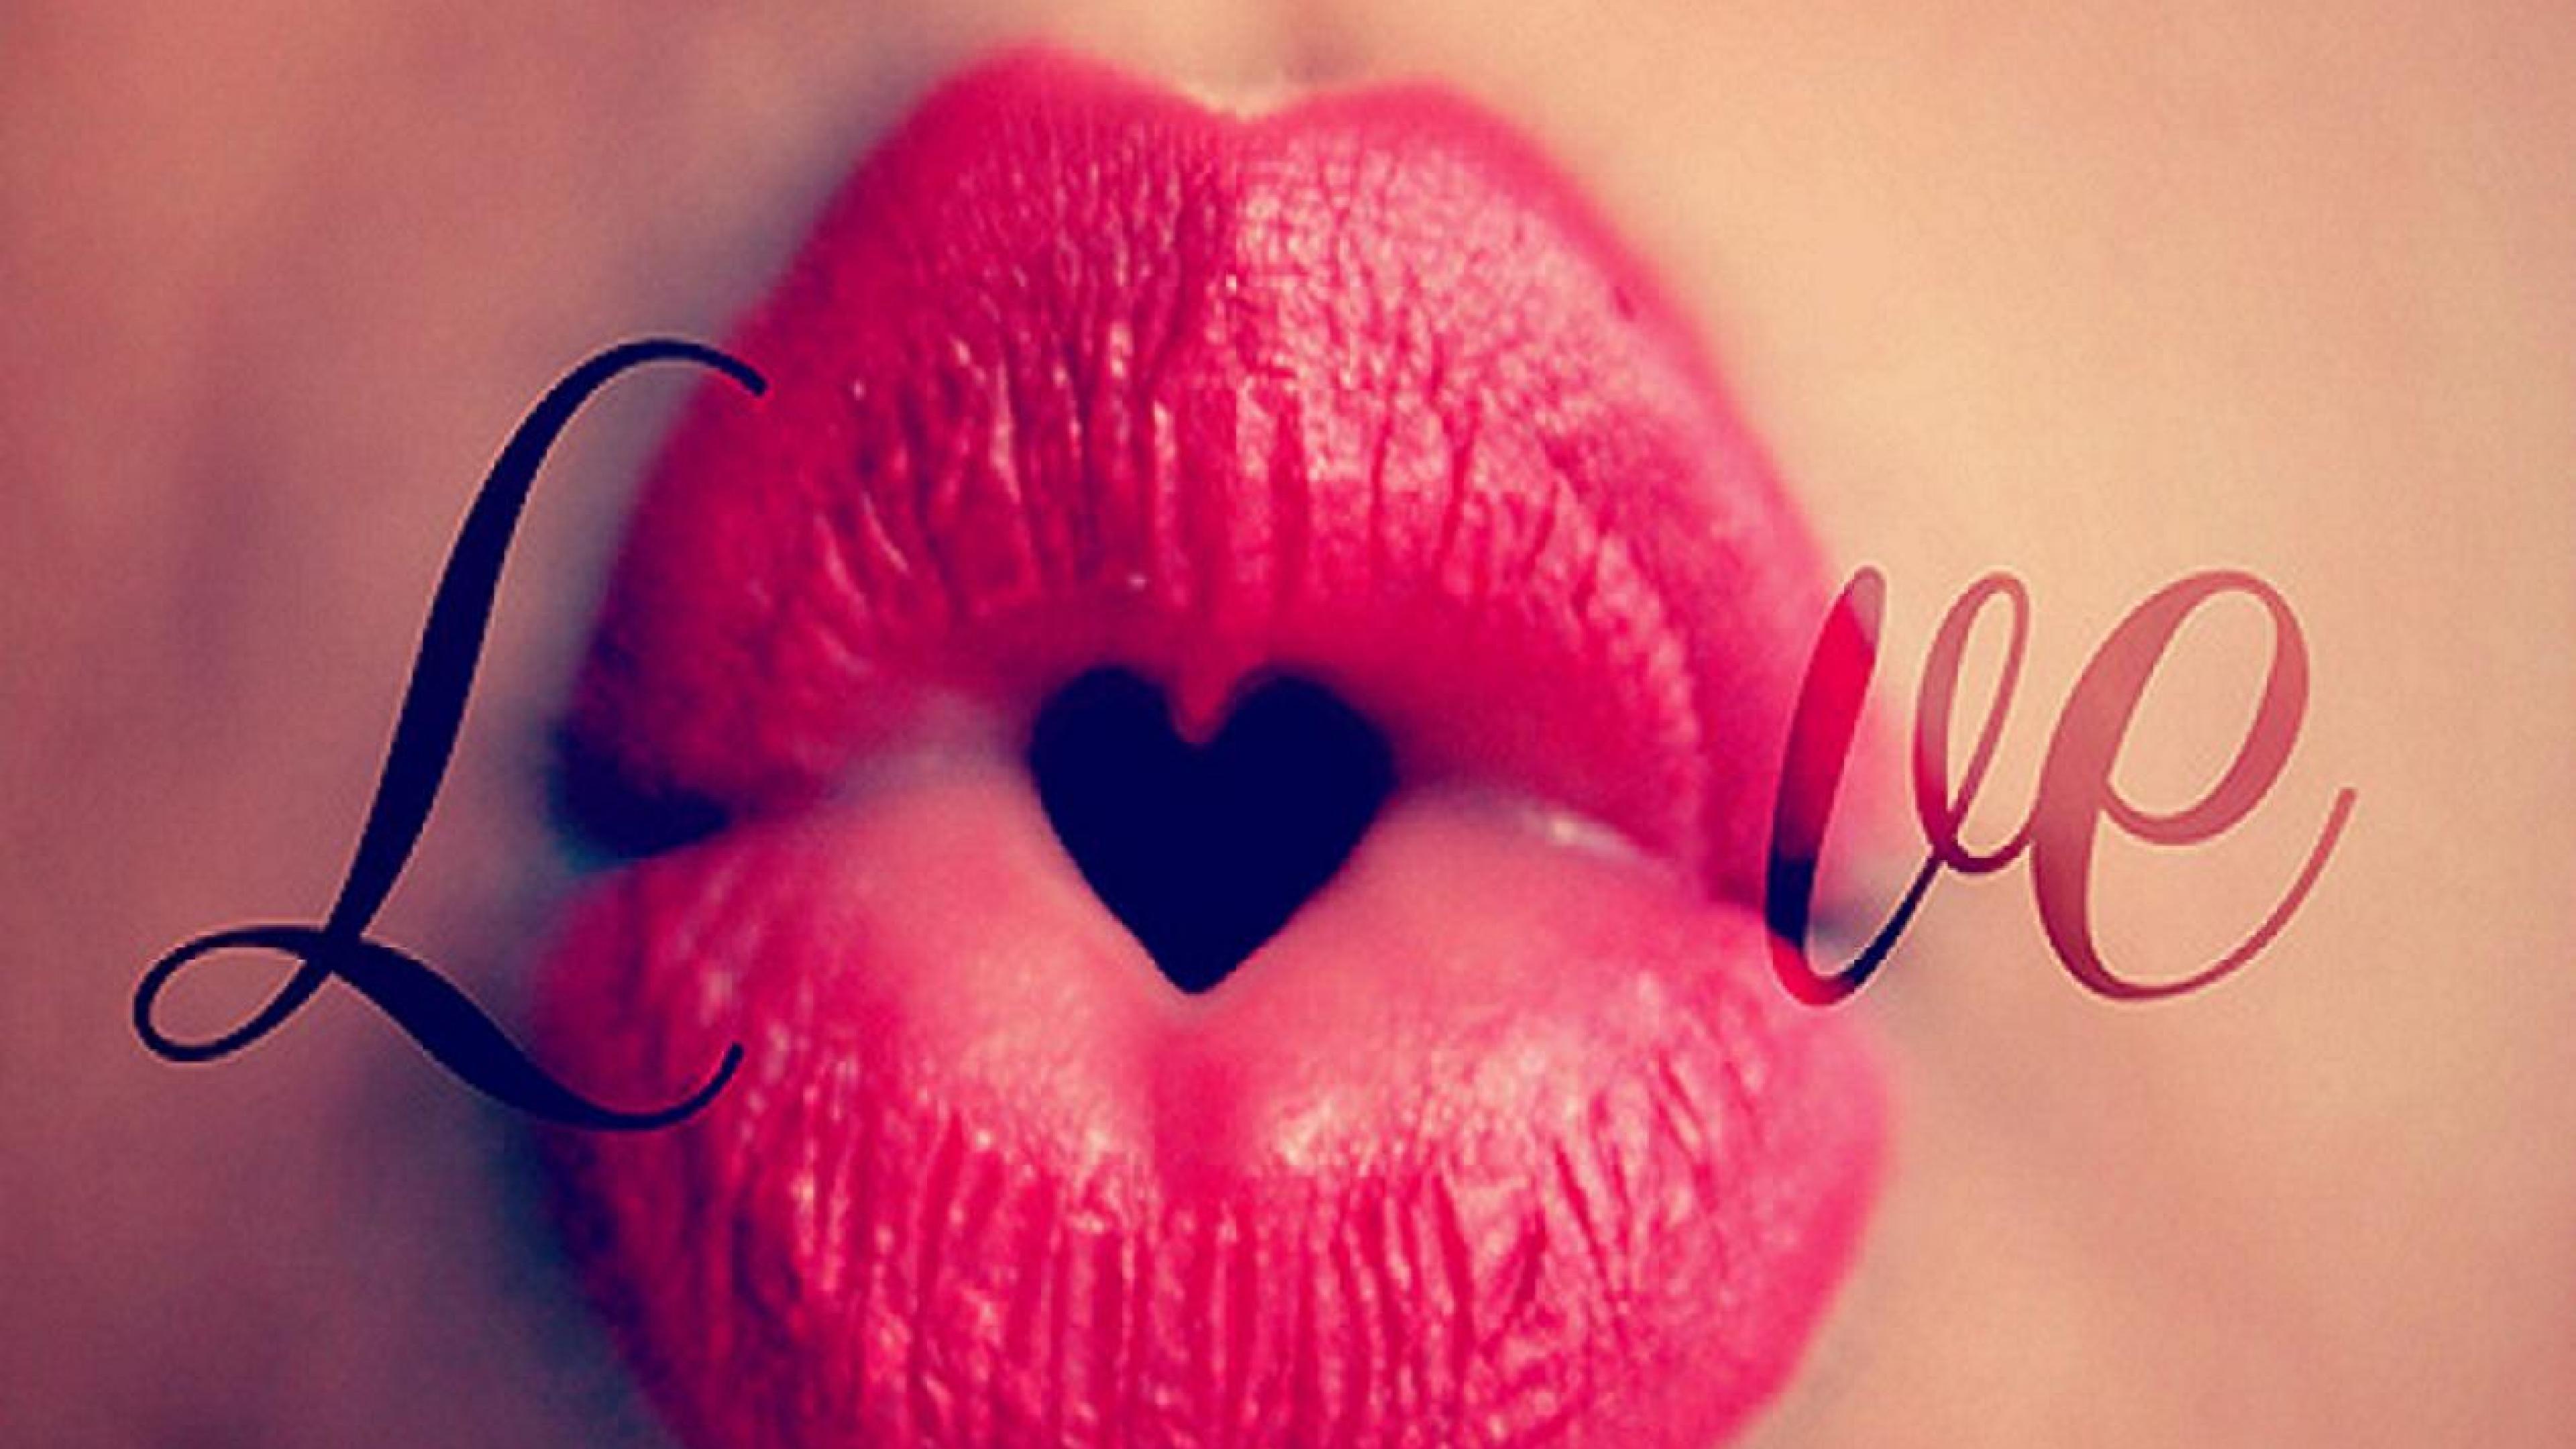 Lip Kiss Wallpaper